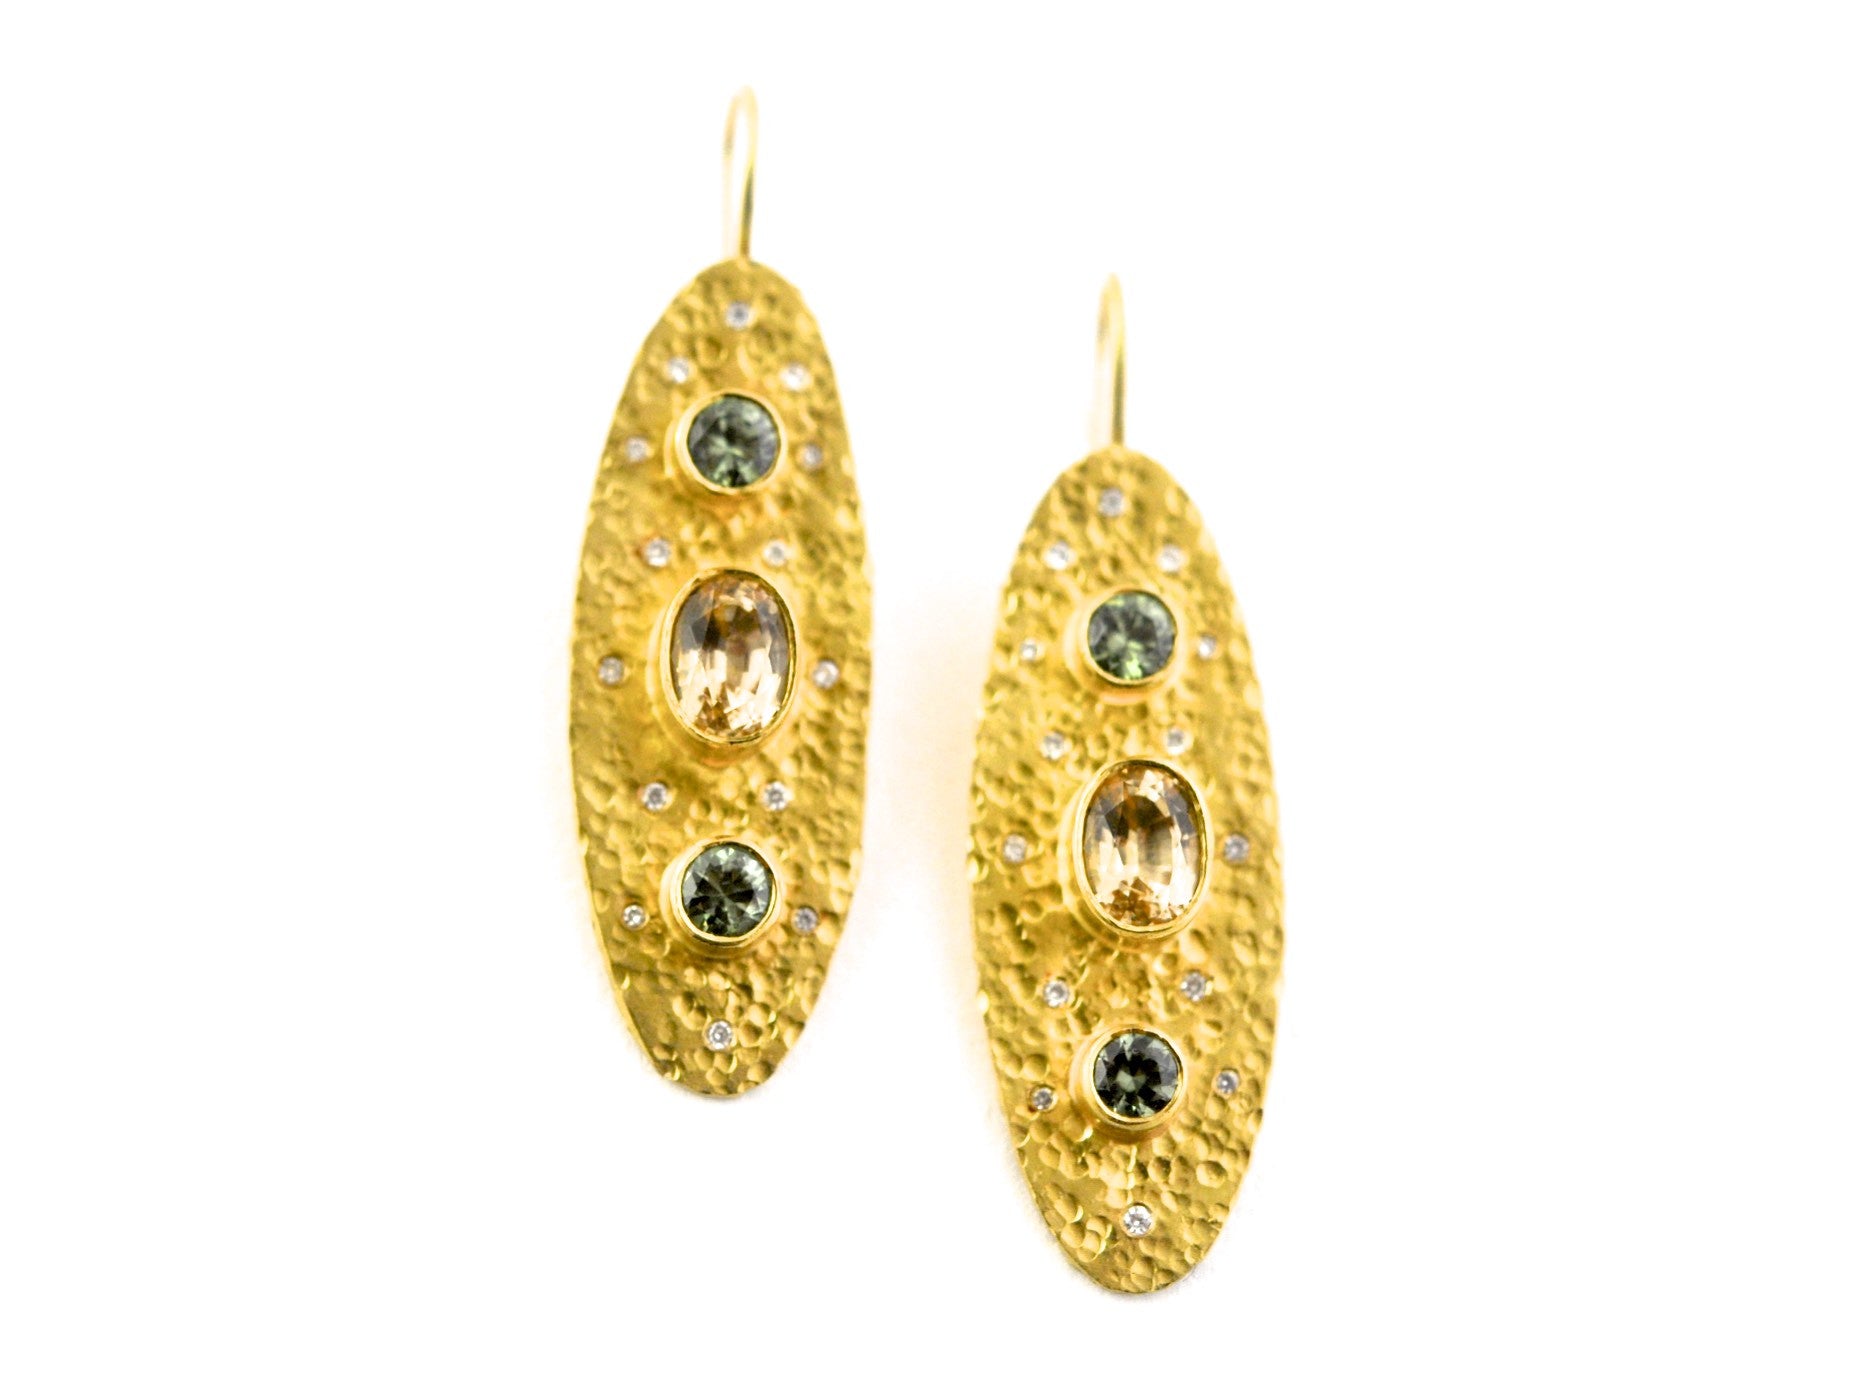 earrings / gold hammered 22k + Demantoid Garnets + Topaz + Diamonds